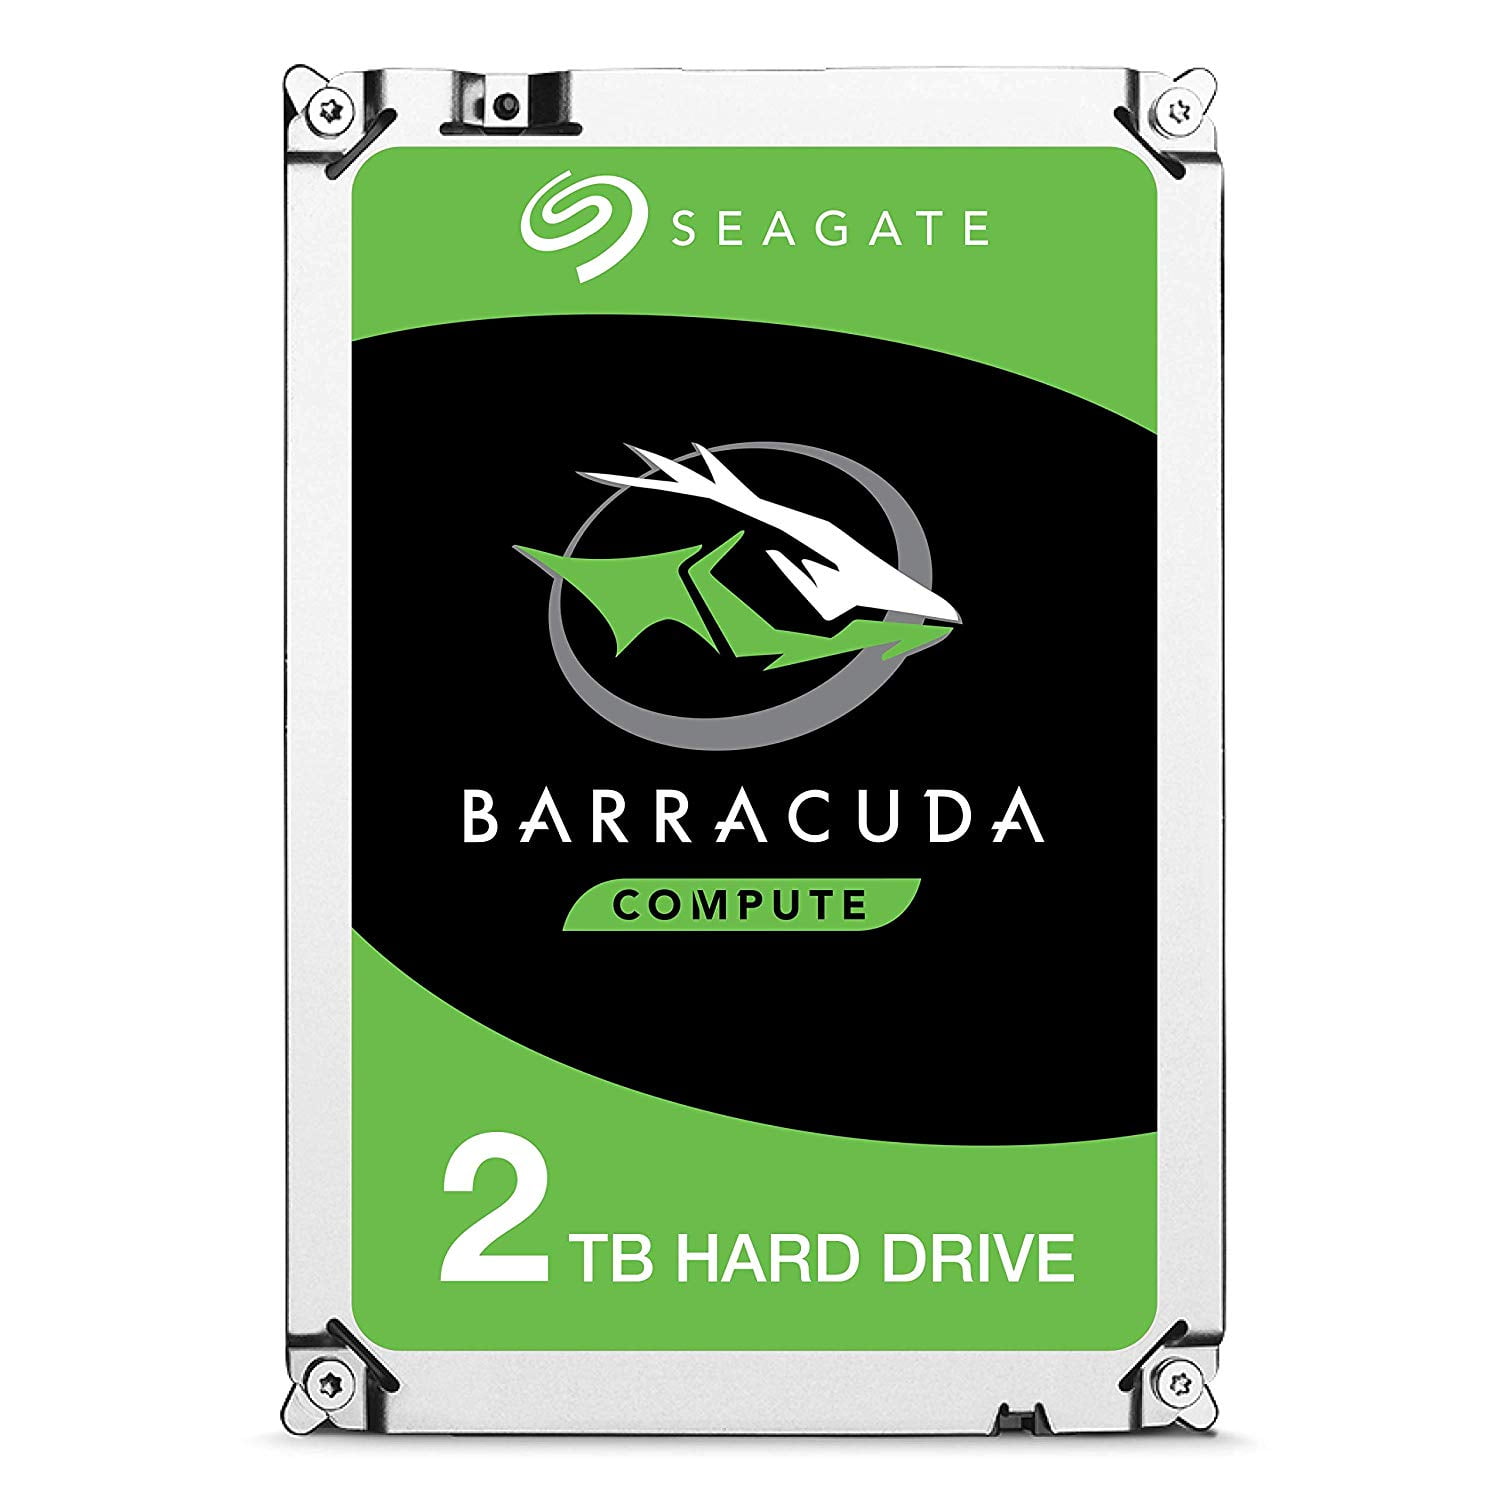 Seagate Barracuda Green 2TB Hard Drive Review